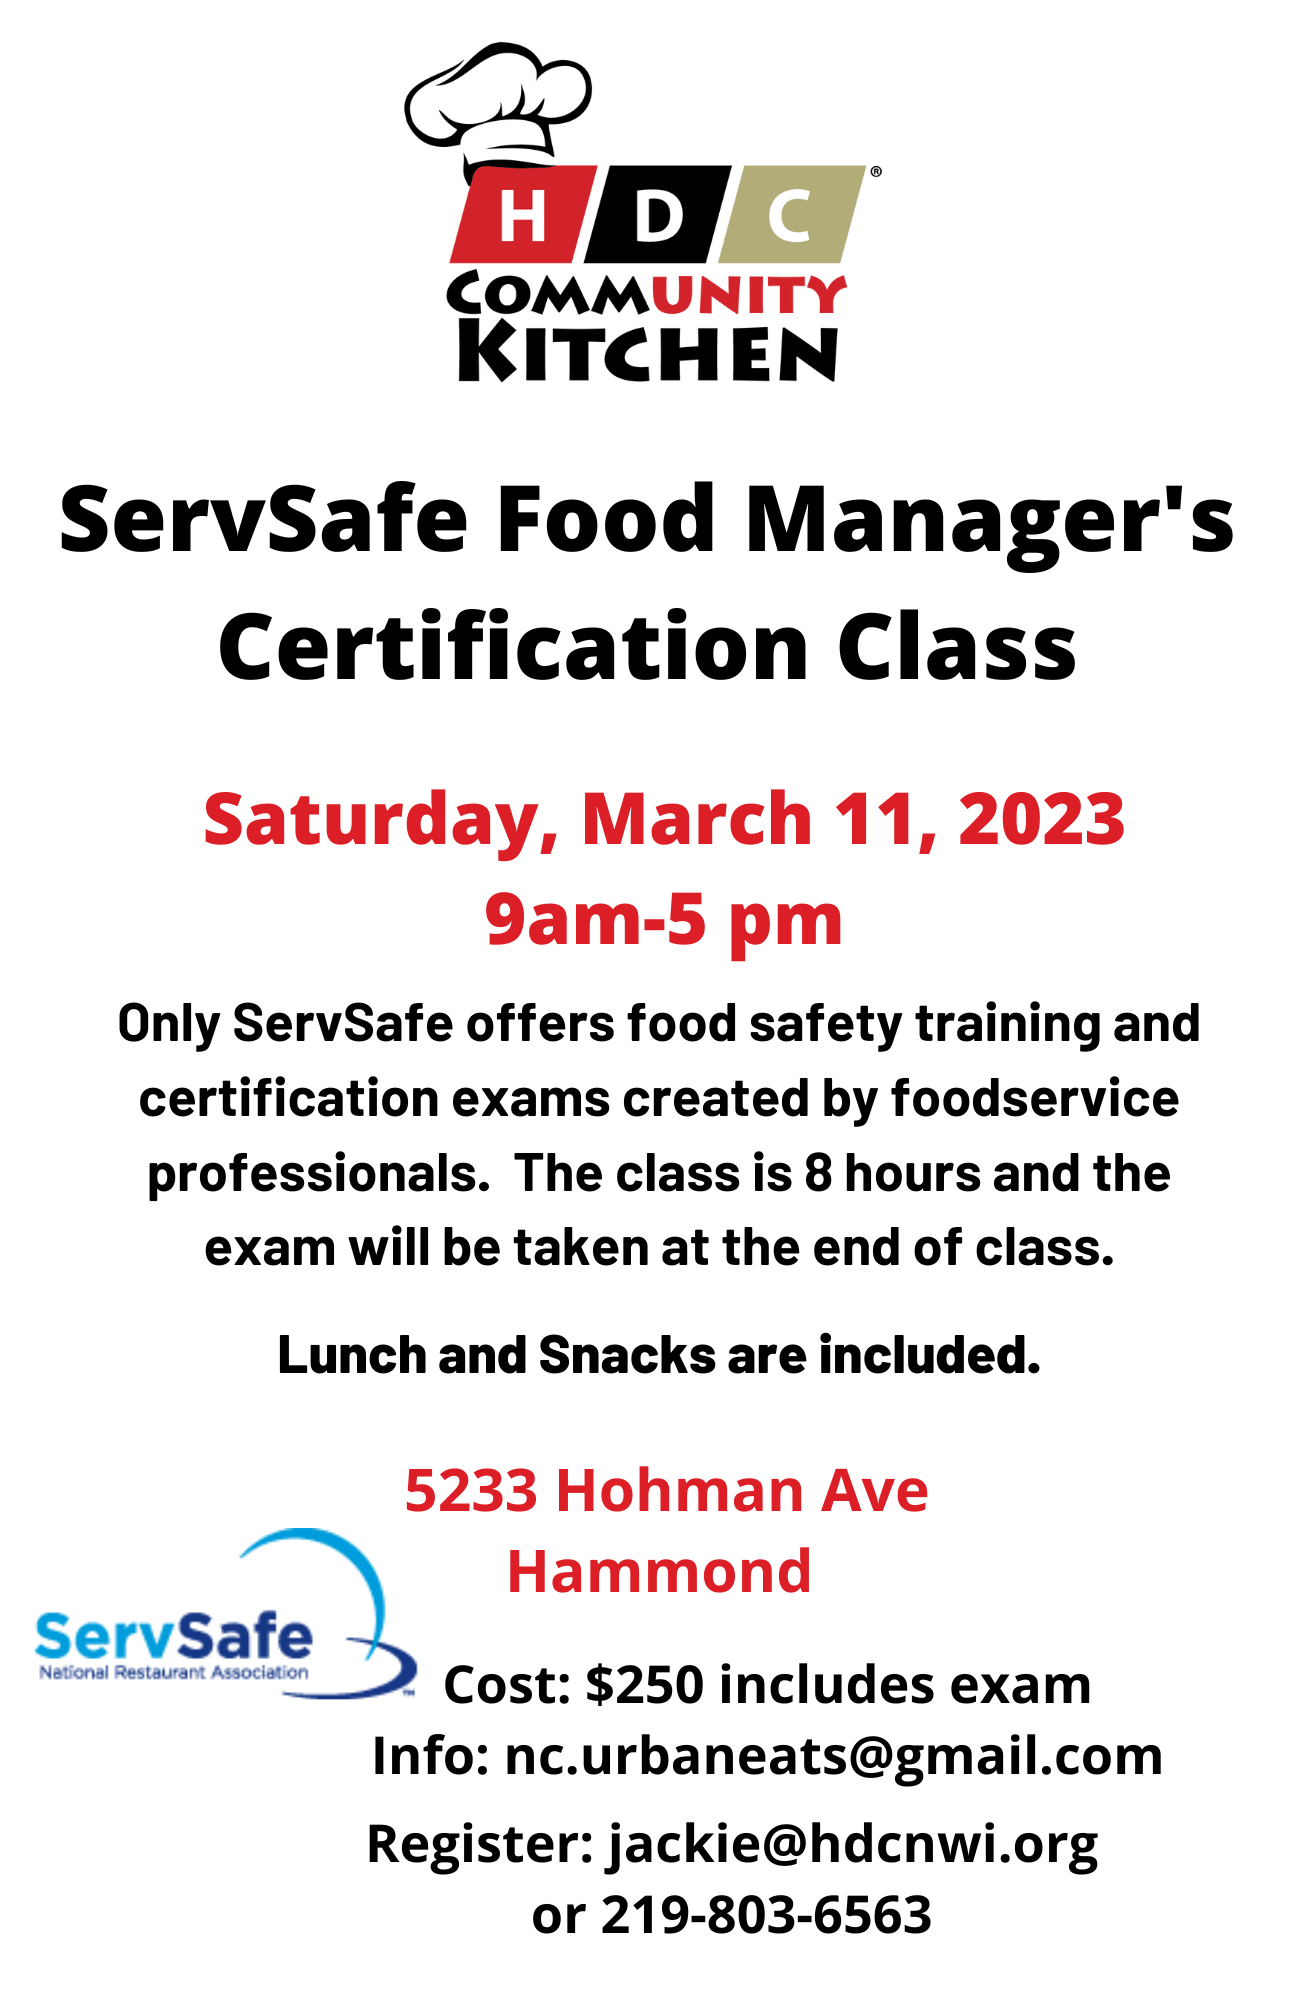 ServSafe Food Manager's Certification Class Flyer